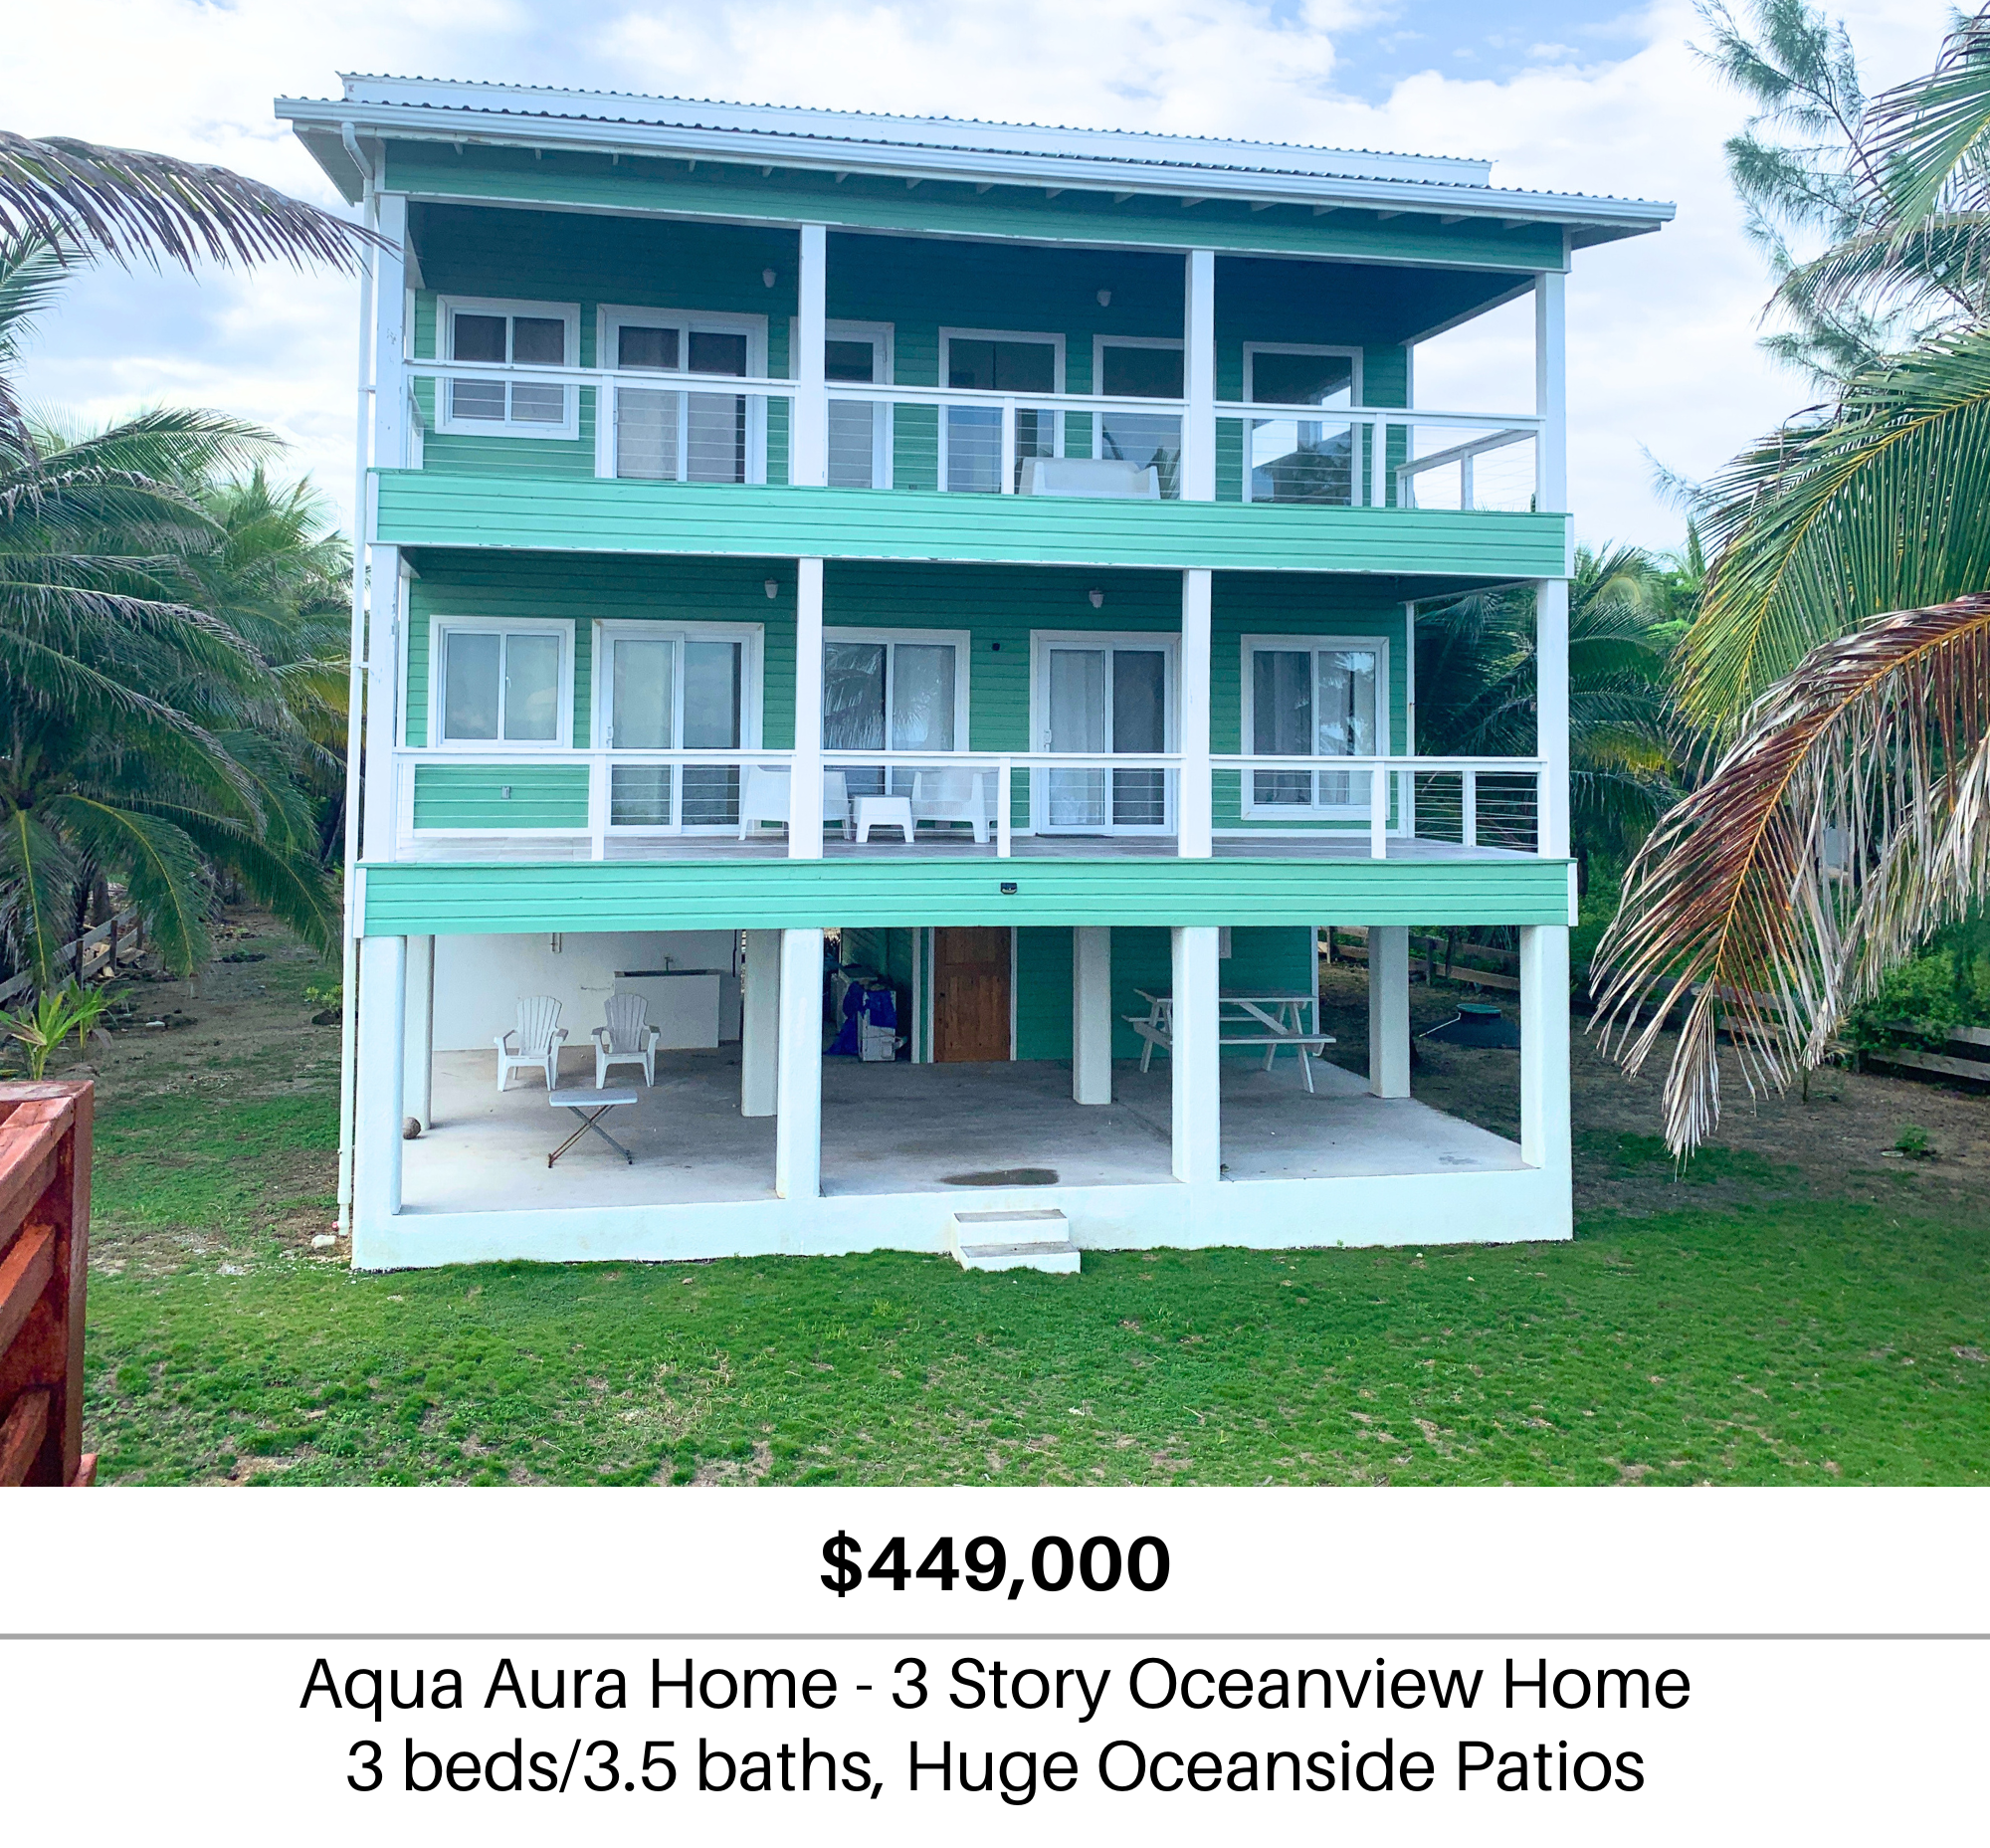 3 bed 3.5 bath oceanside home in Utila Honduras for sale